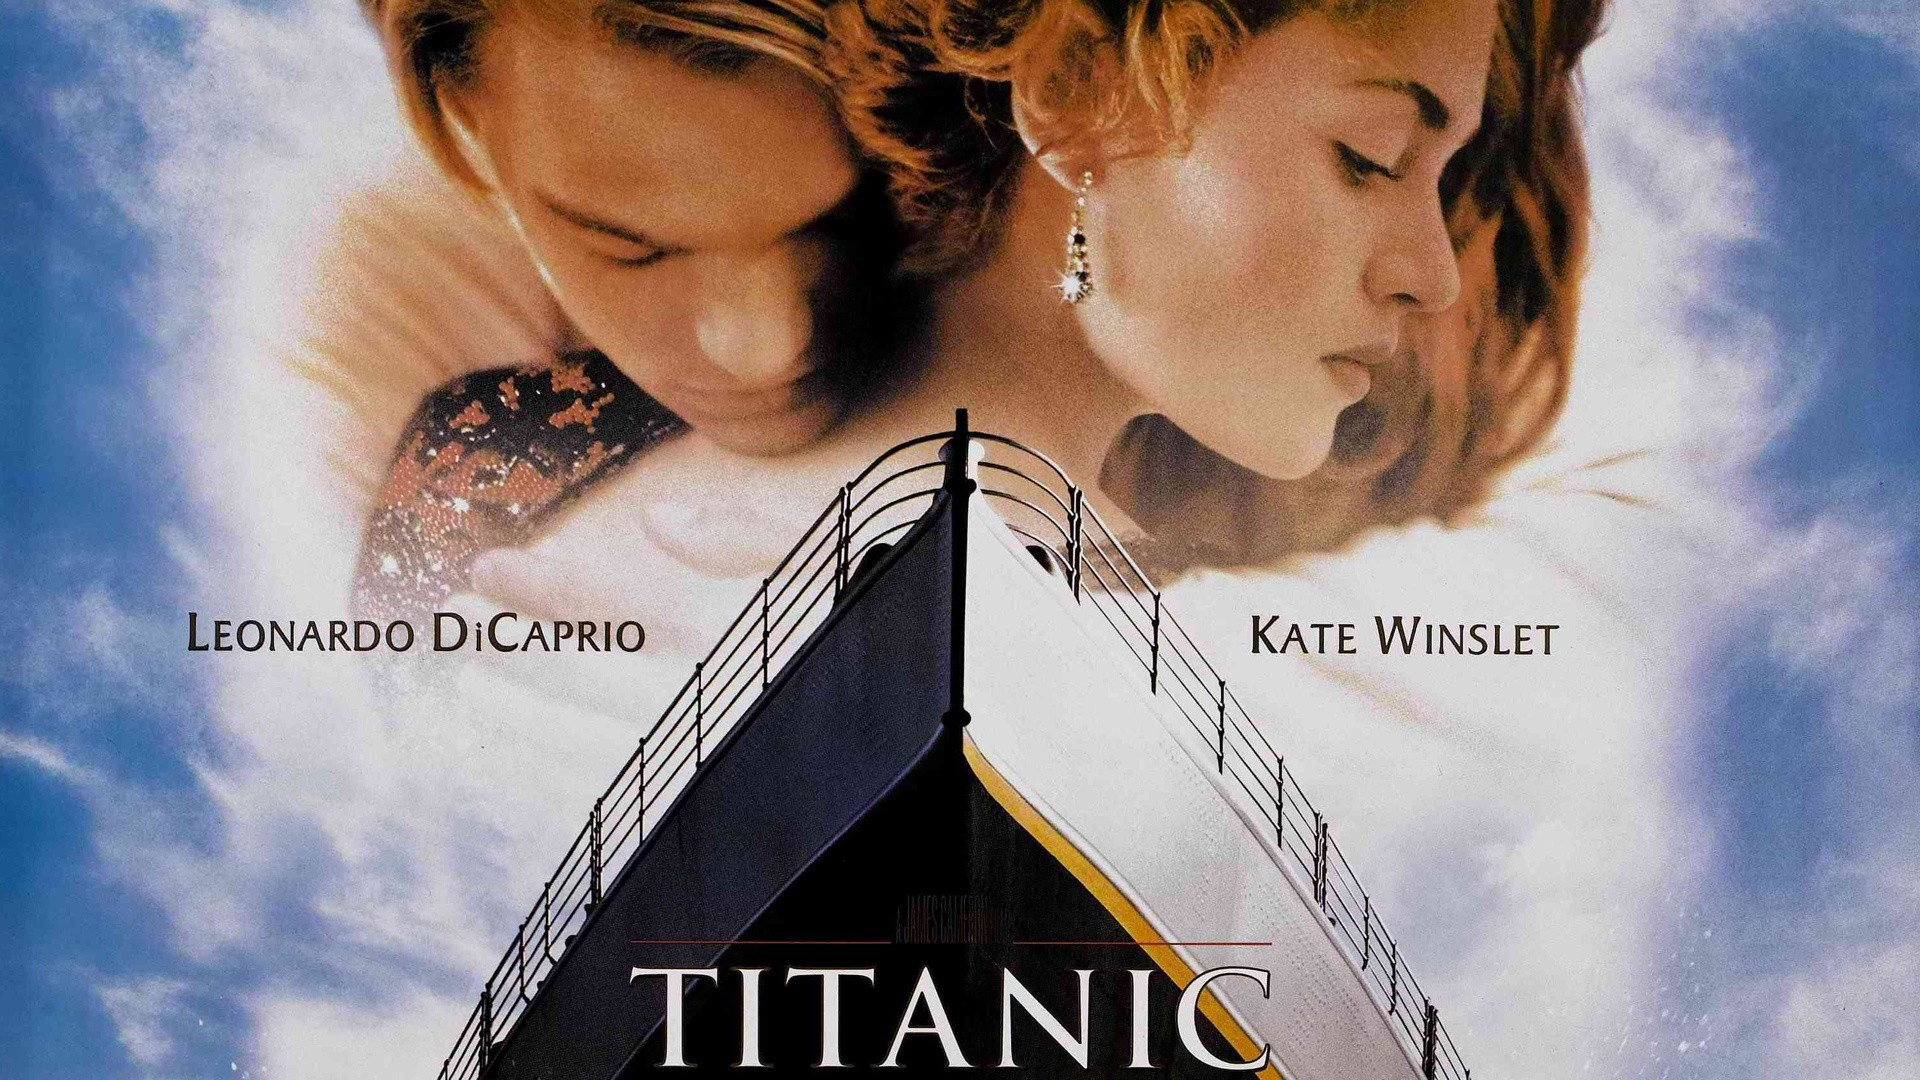 Description Download Titanic Movie HD Widescreen Movies Wallpaper from